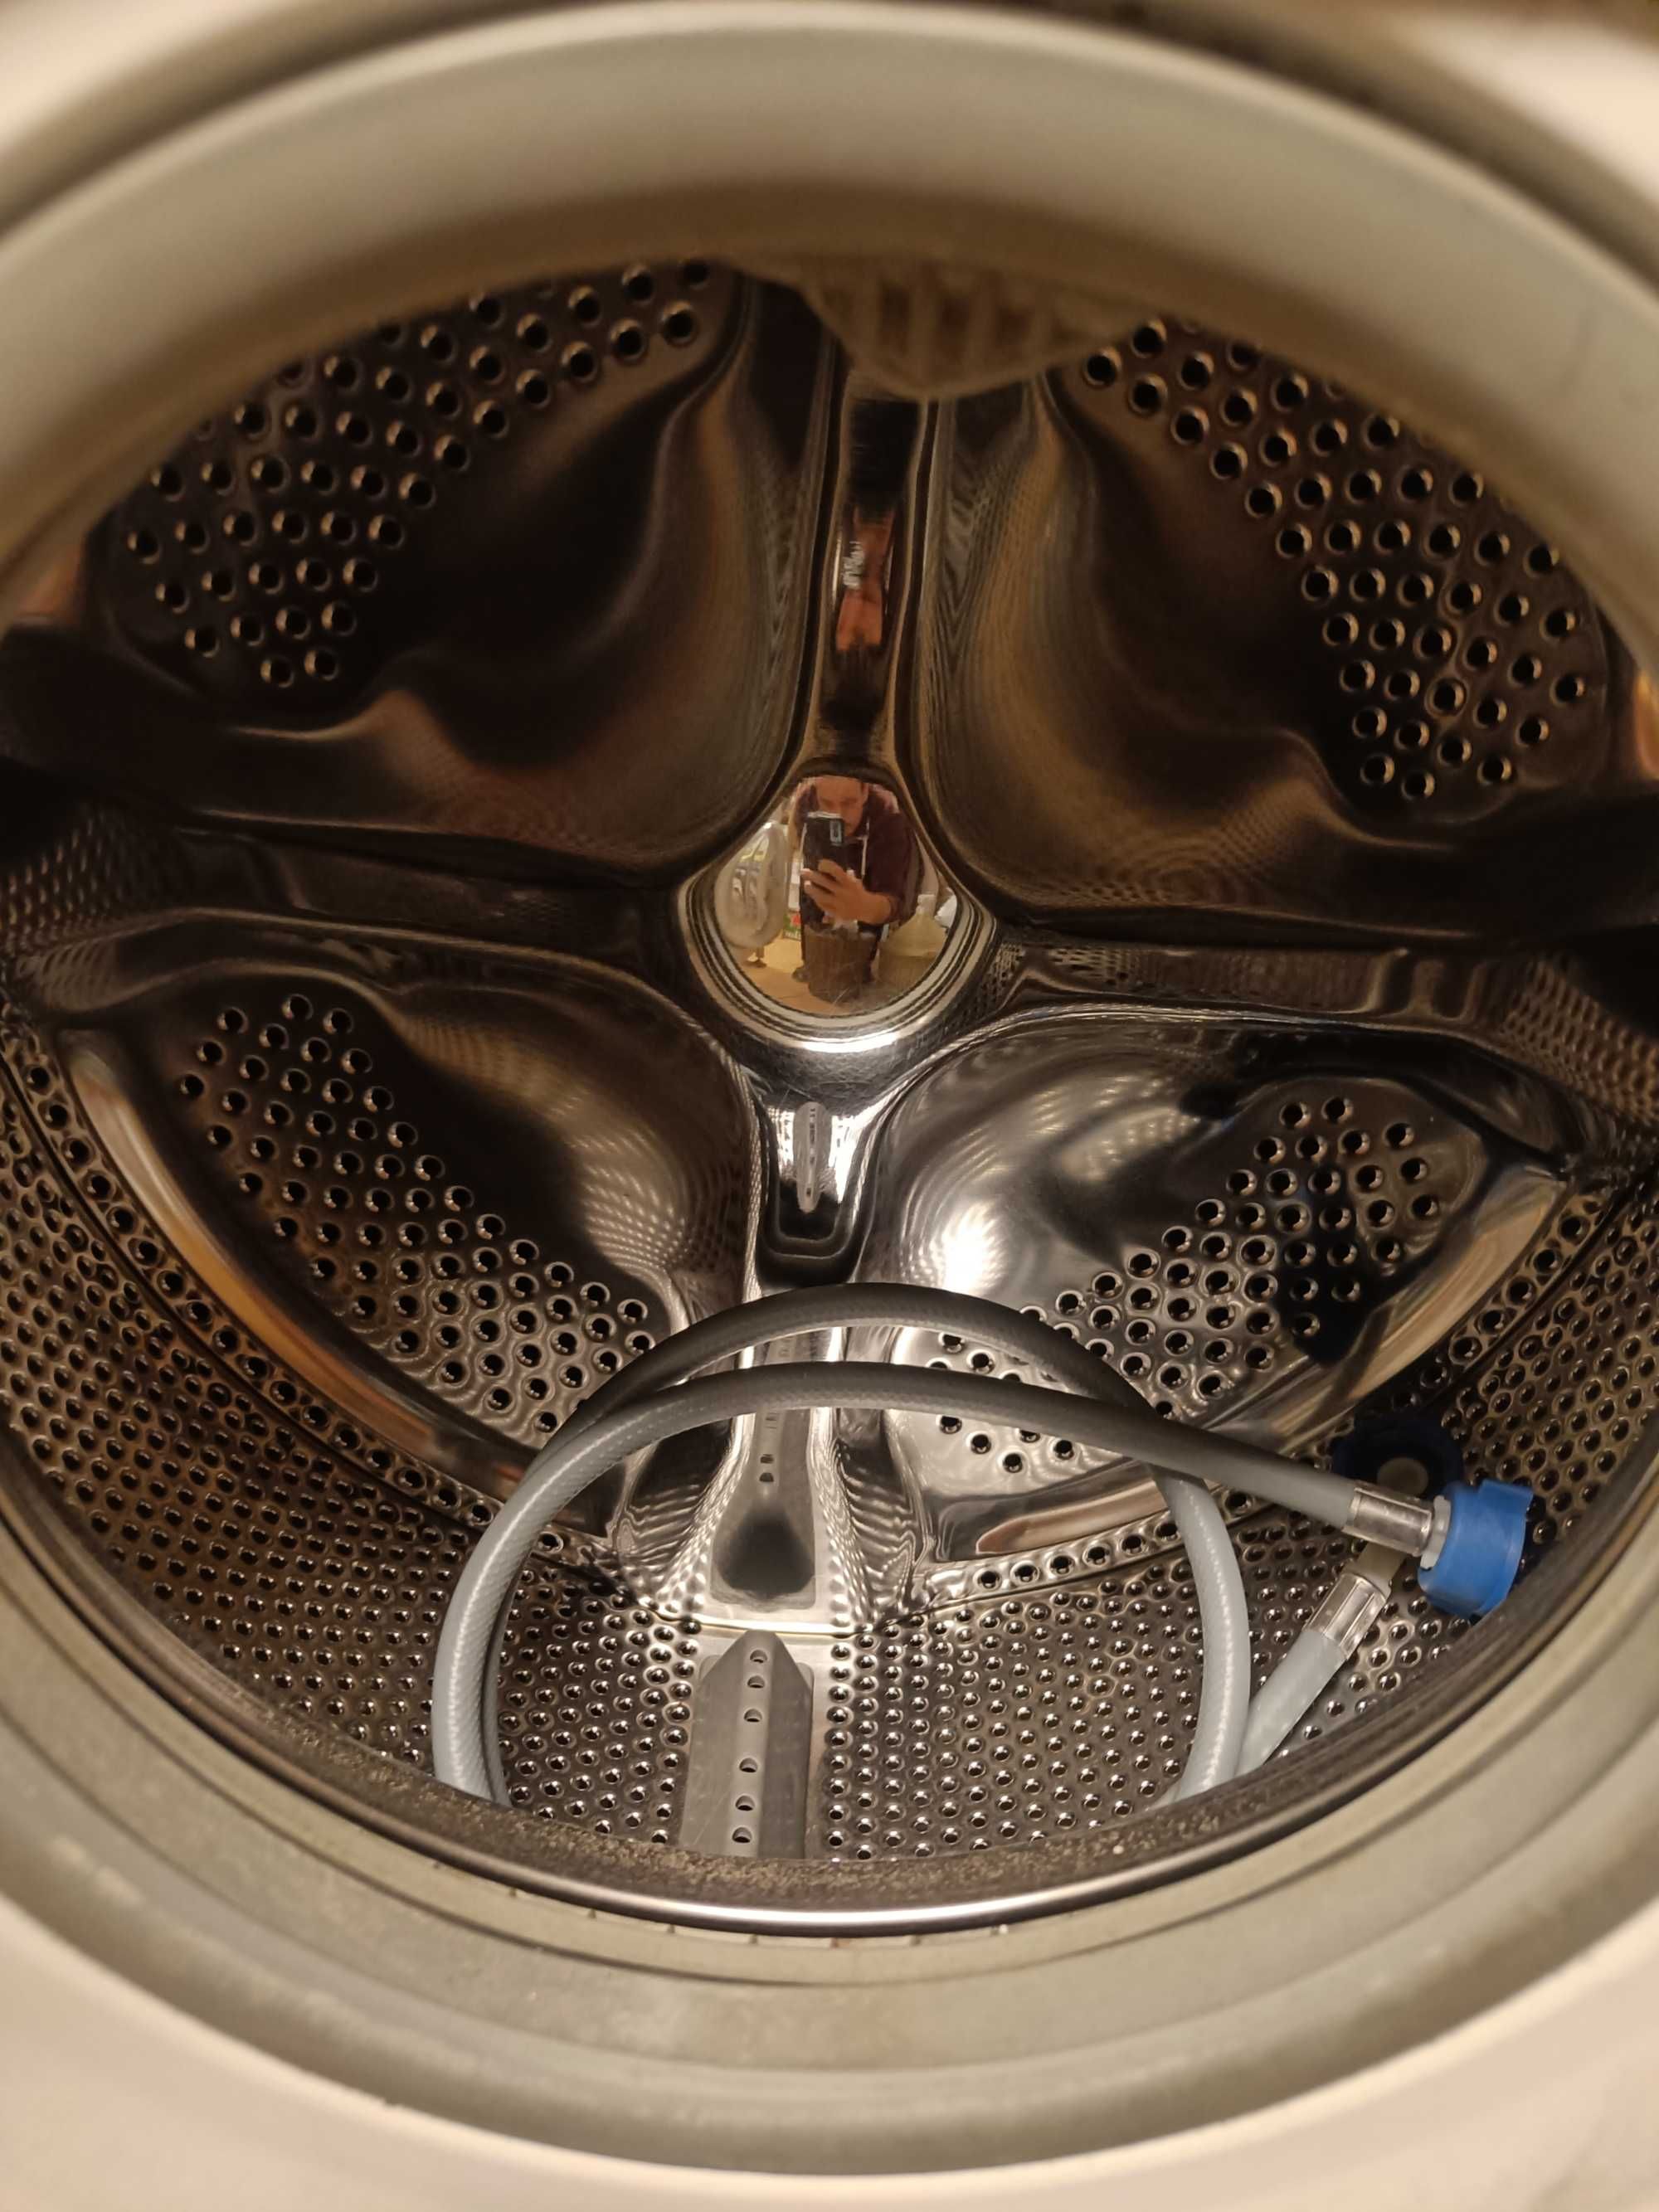 Pralka Whirlpool automat do prania